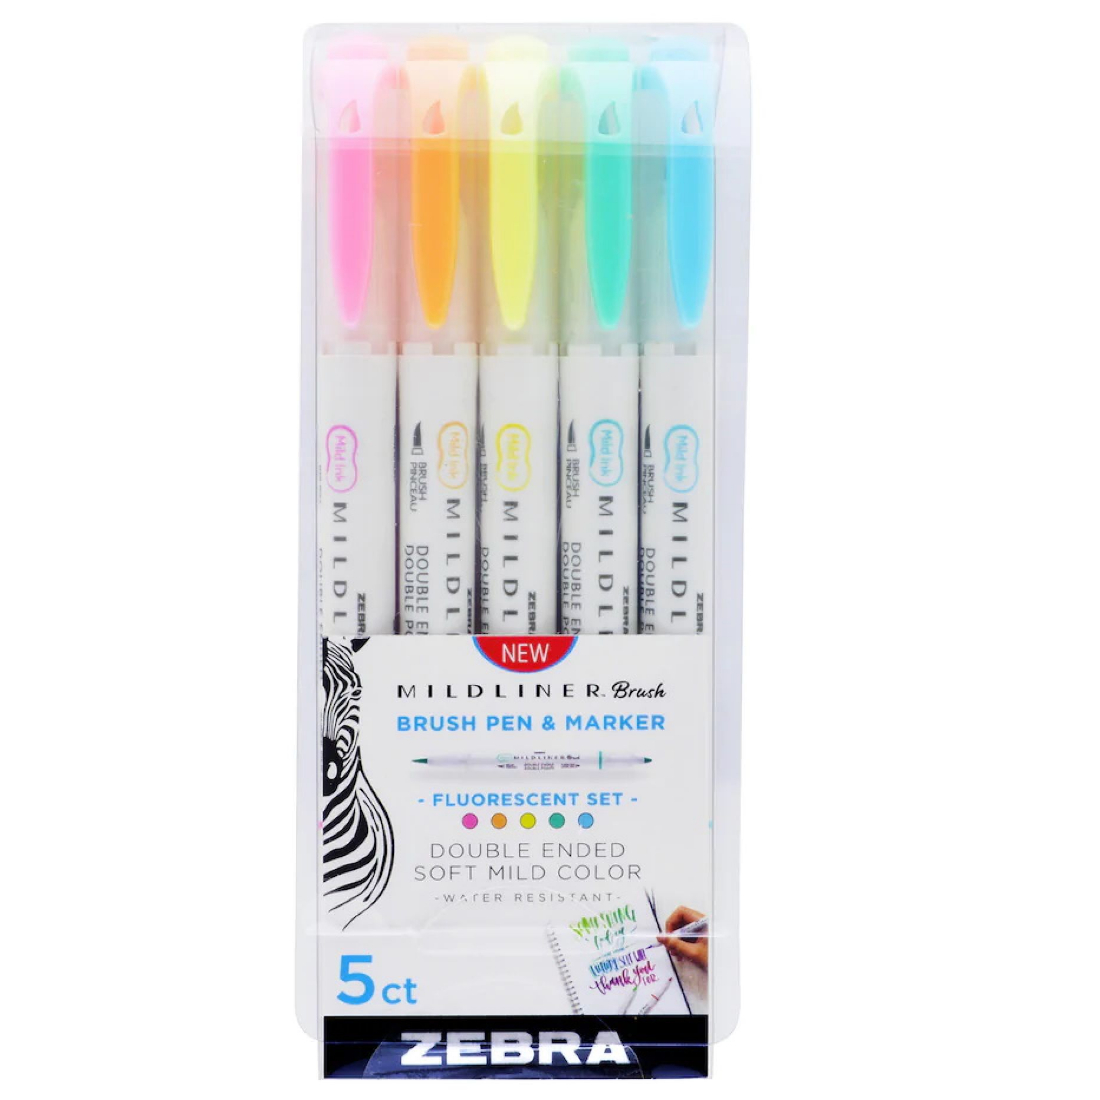 Marcadores Mildliner Brush Duplo Fluorescente zebra